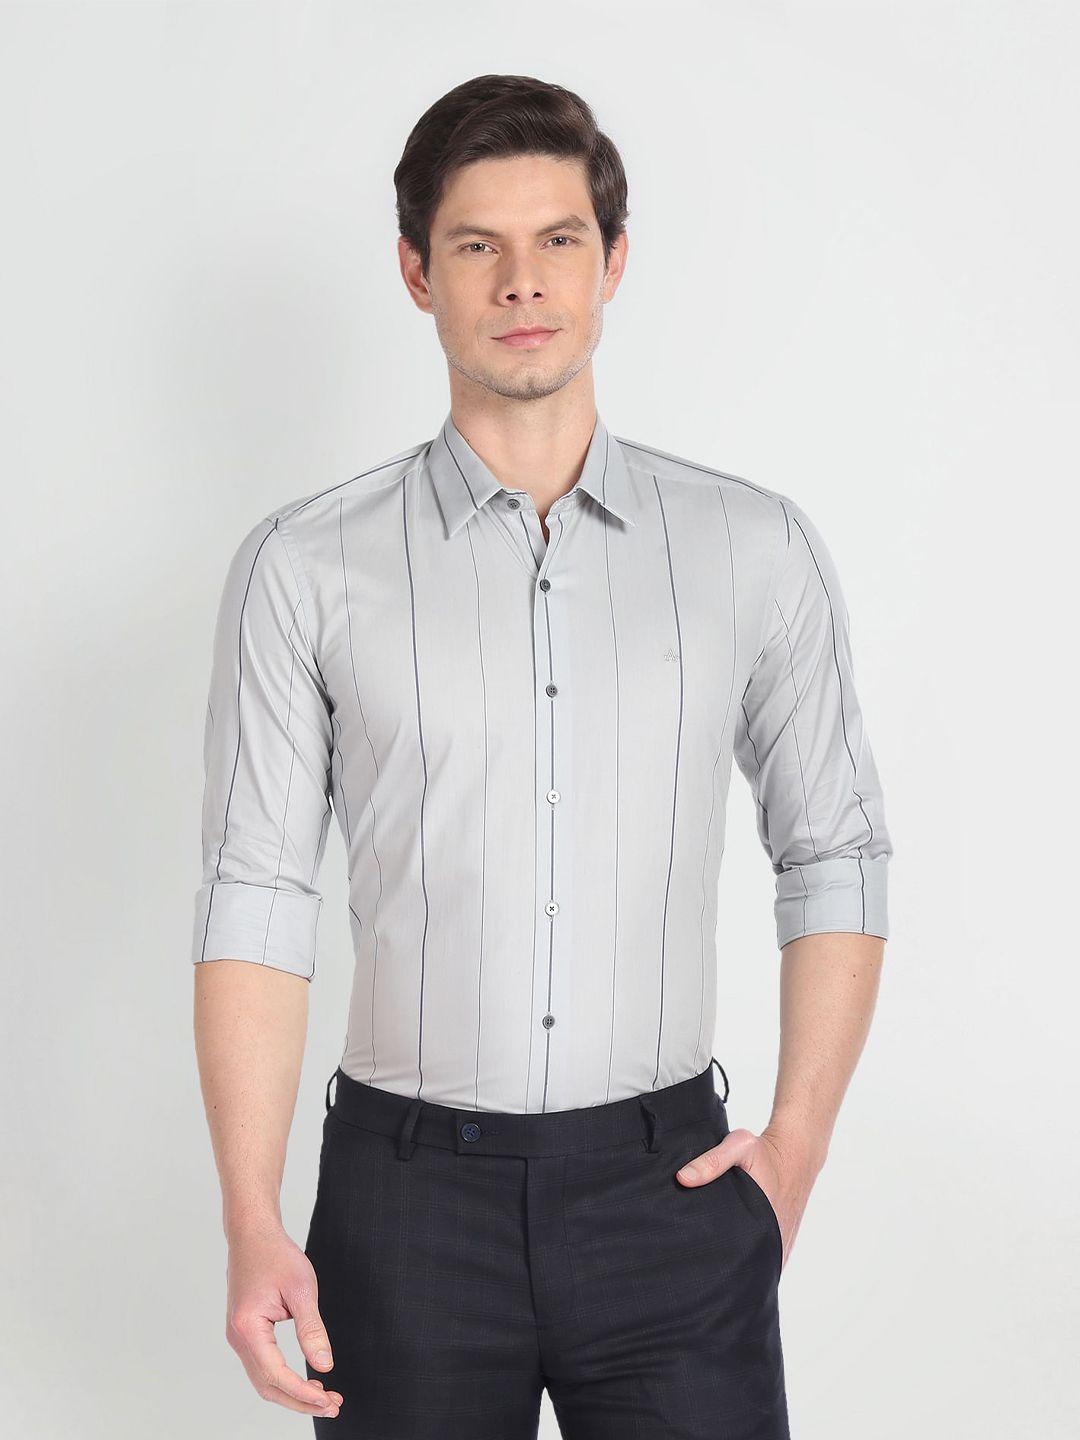 arrow-new-york-slim-fit-vertical-stripes-twill-pure-cotton-formal-shirt